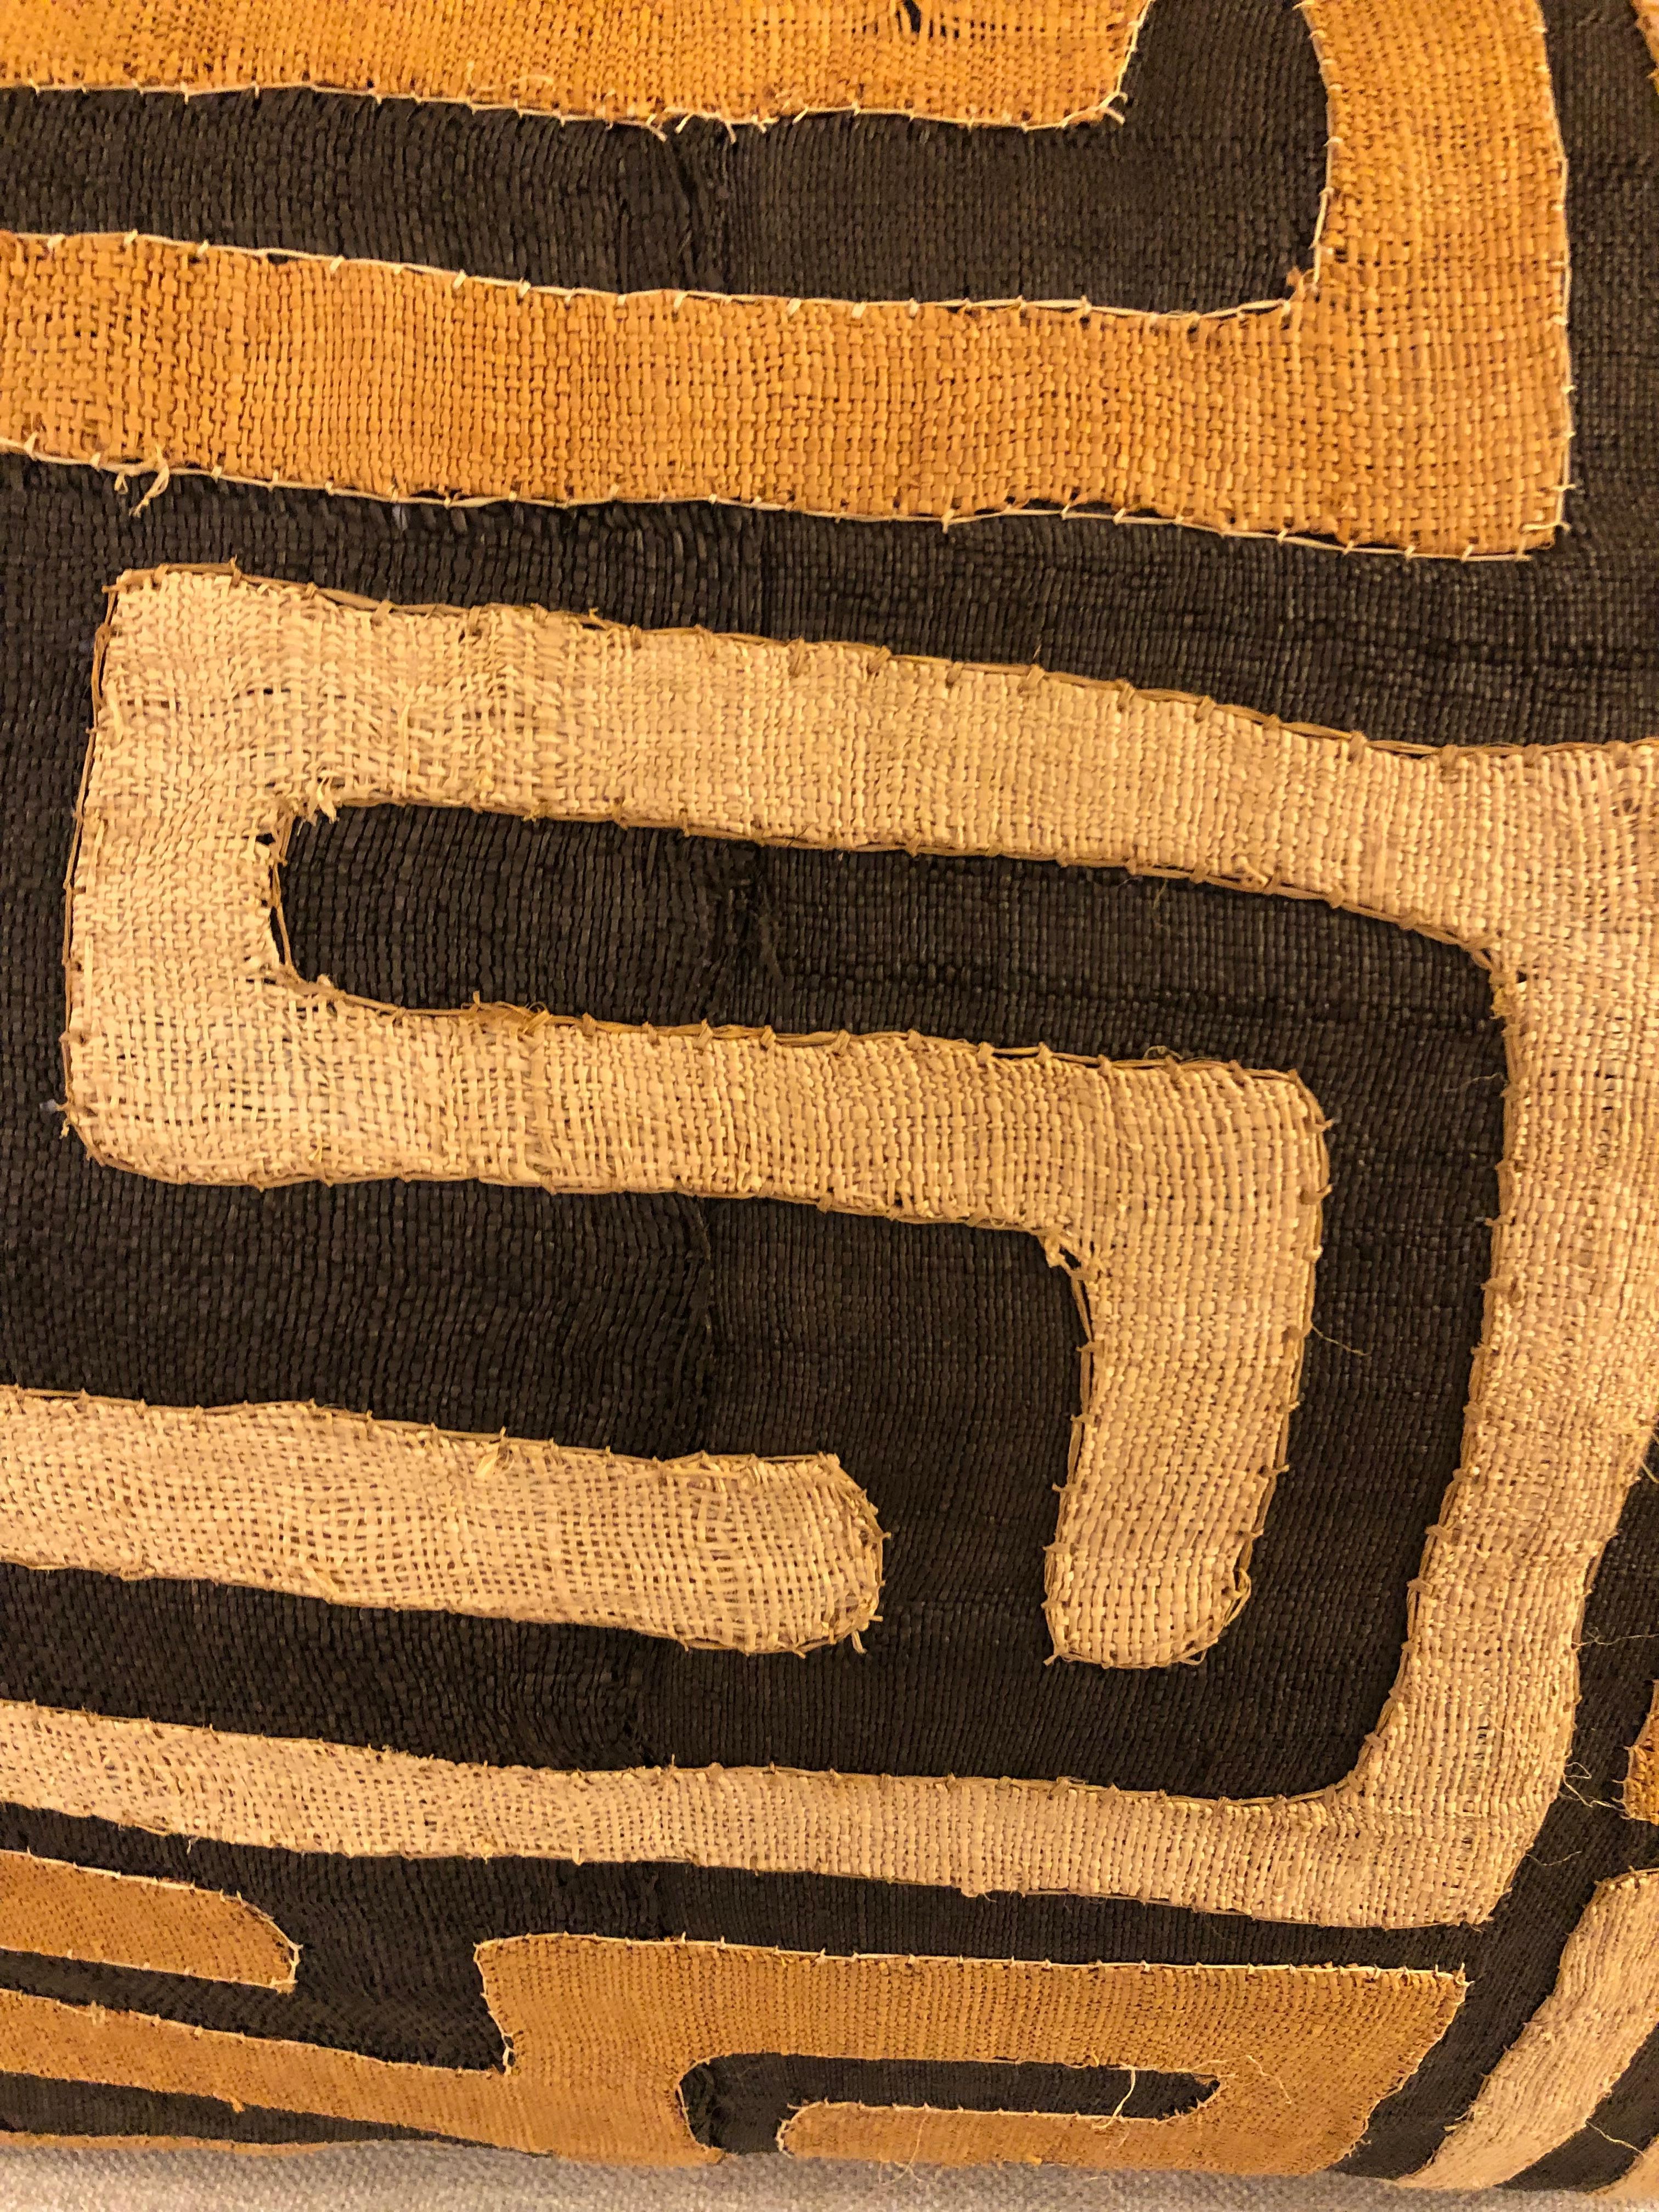 Tribal Large Graphic Kuba Cloth African Pillow